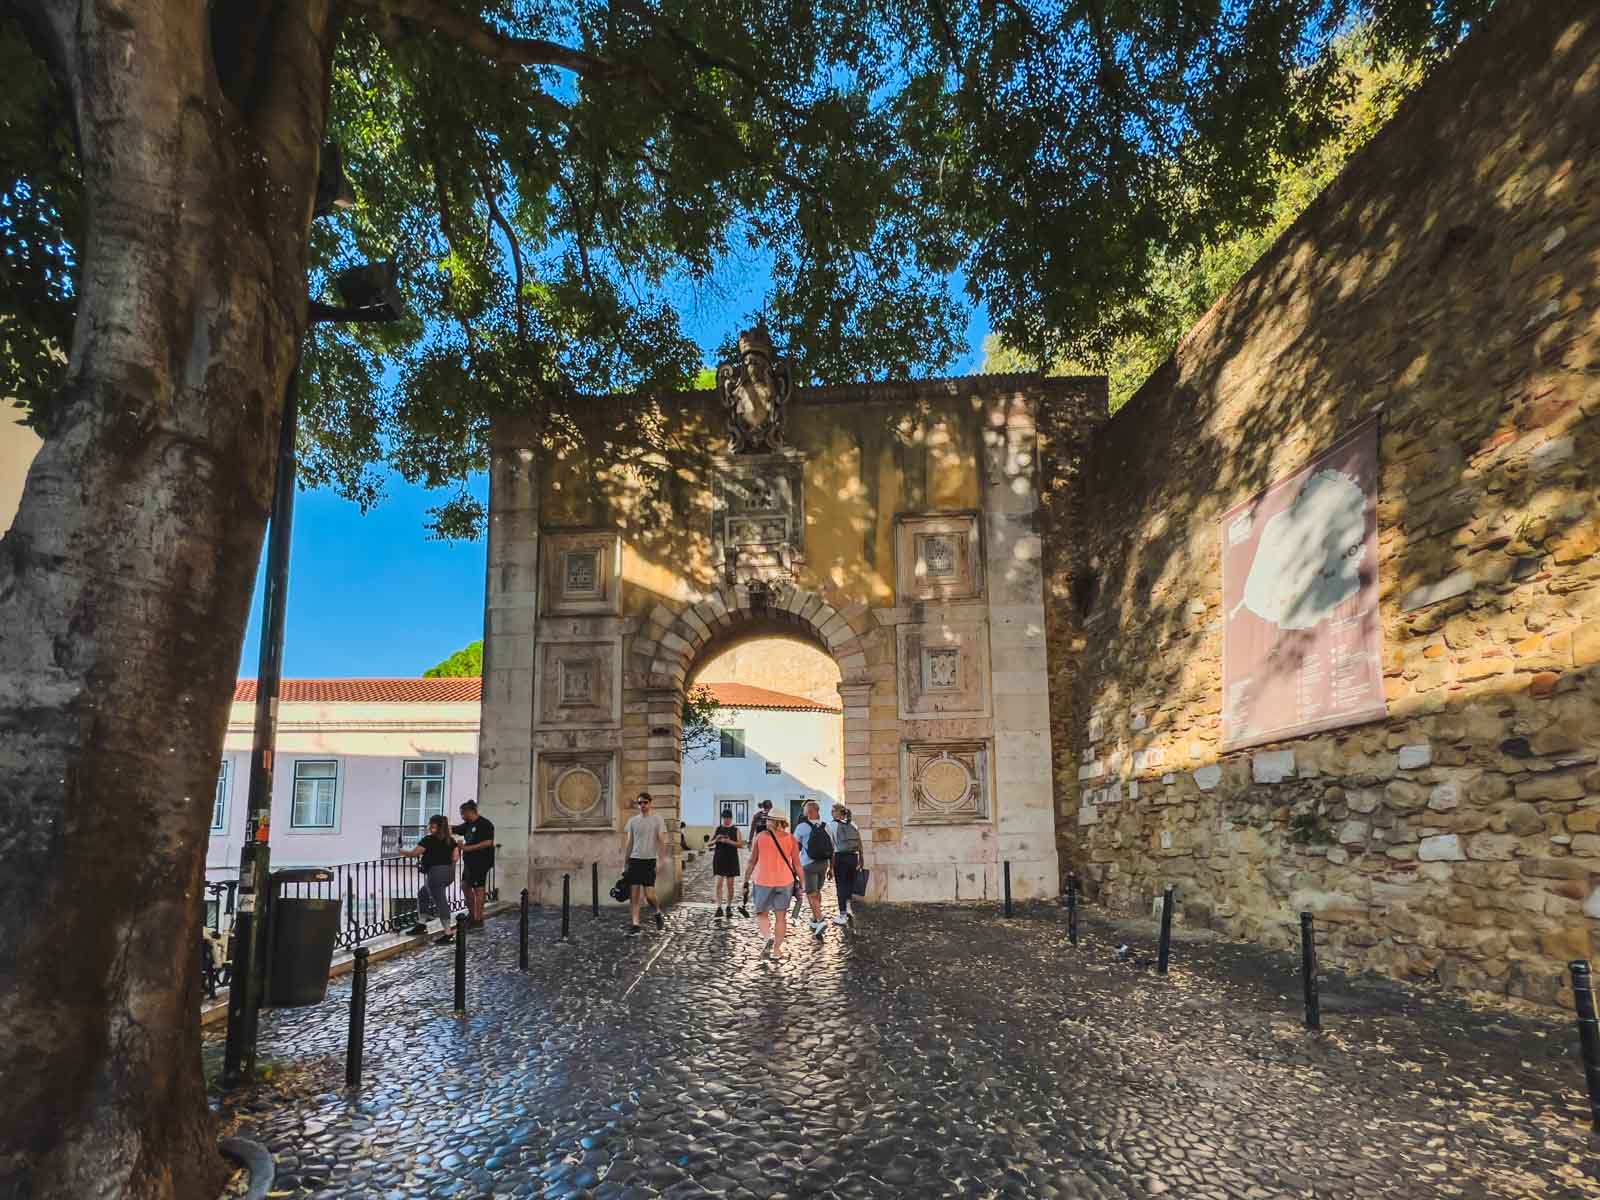 Entrance to Castelo de Sao Jorge in Lisbon, Portugal